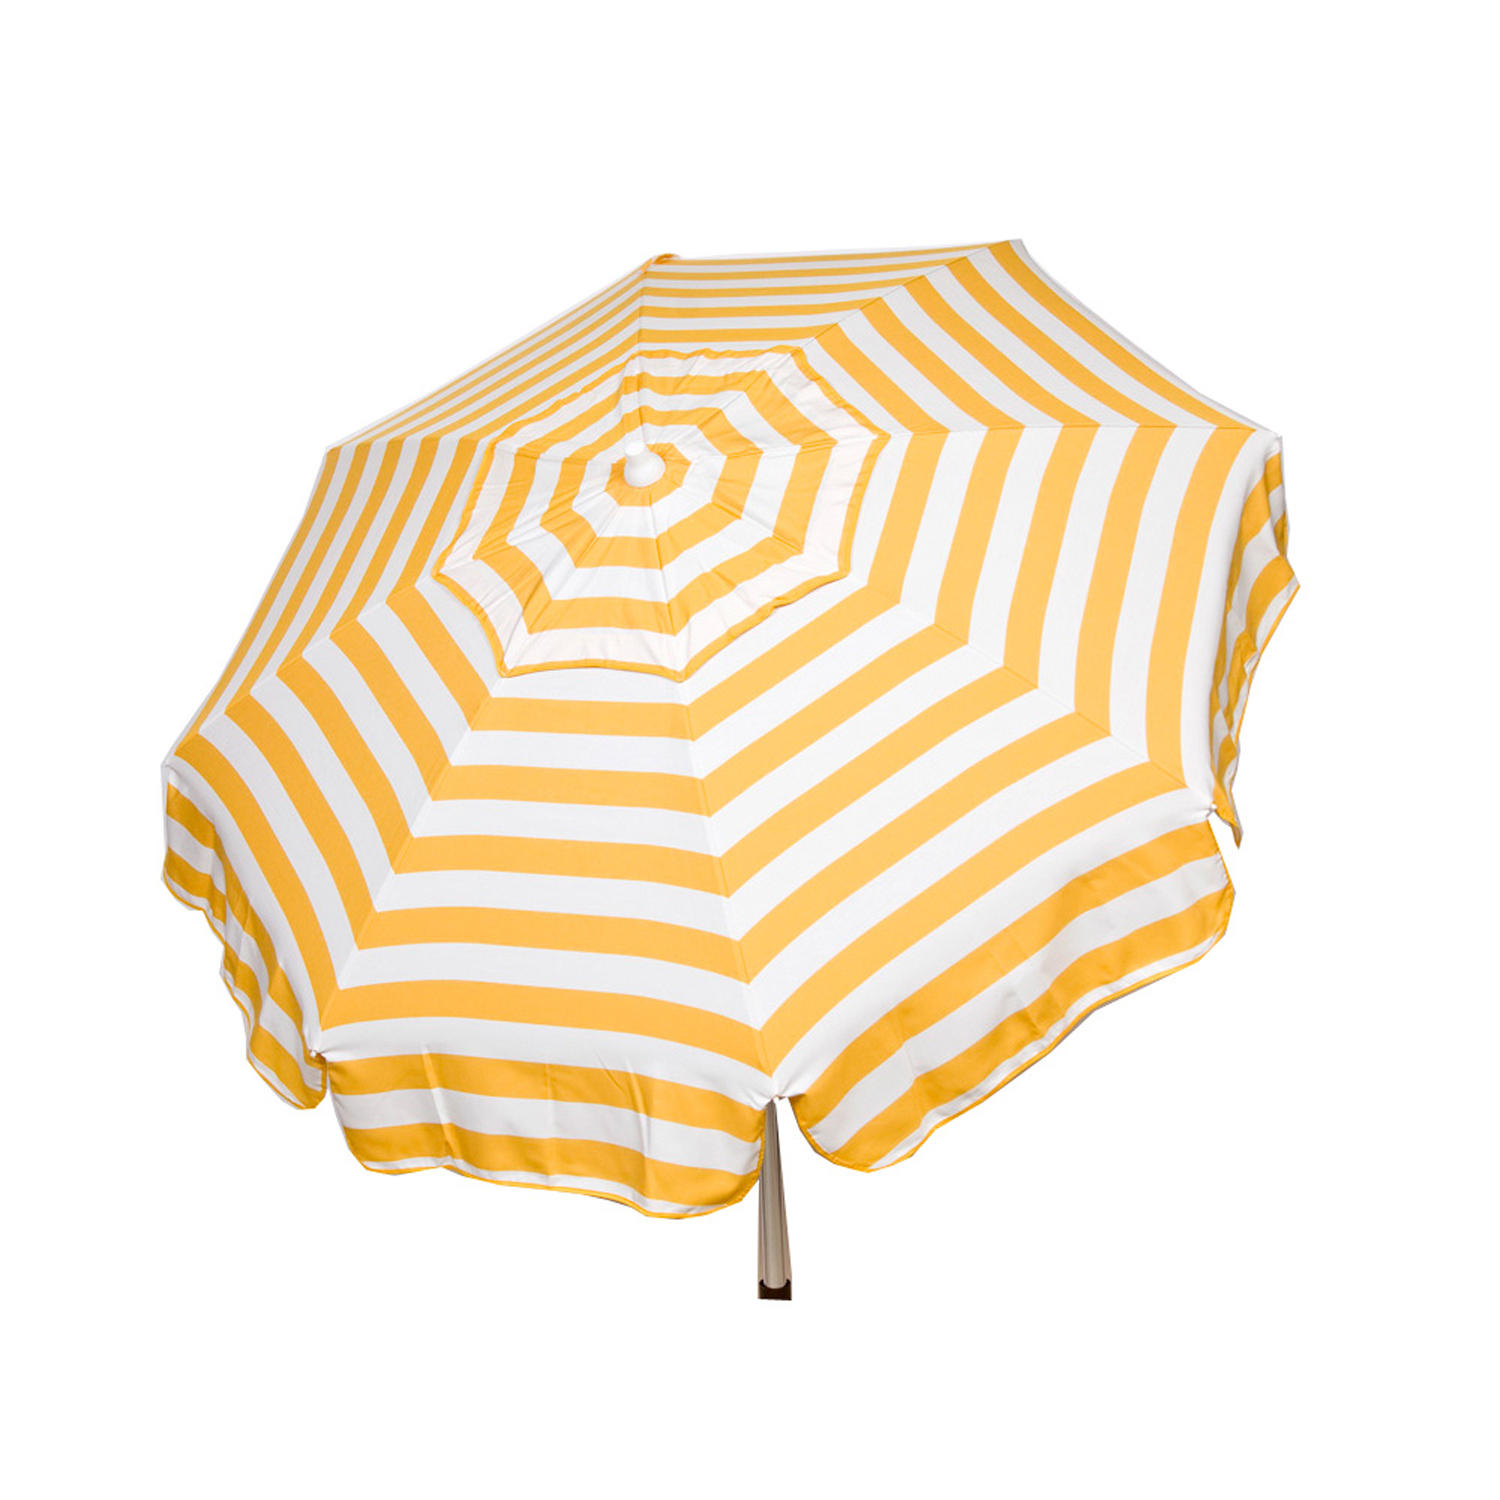 Italian 6 ft Umbrella Acrylic Stripes Yellow and White - Patio Pole